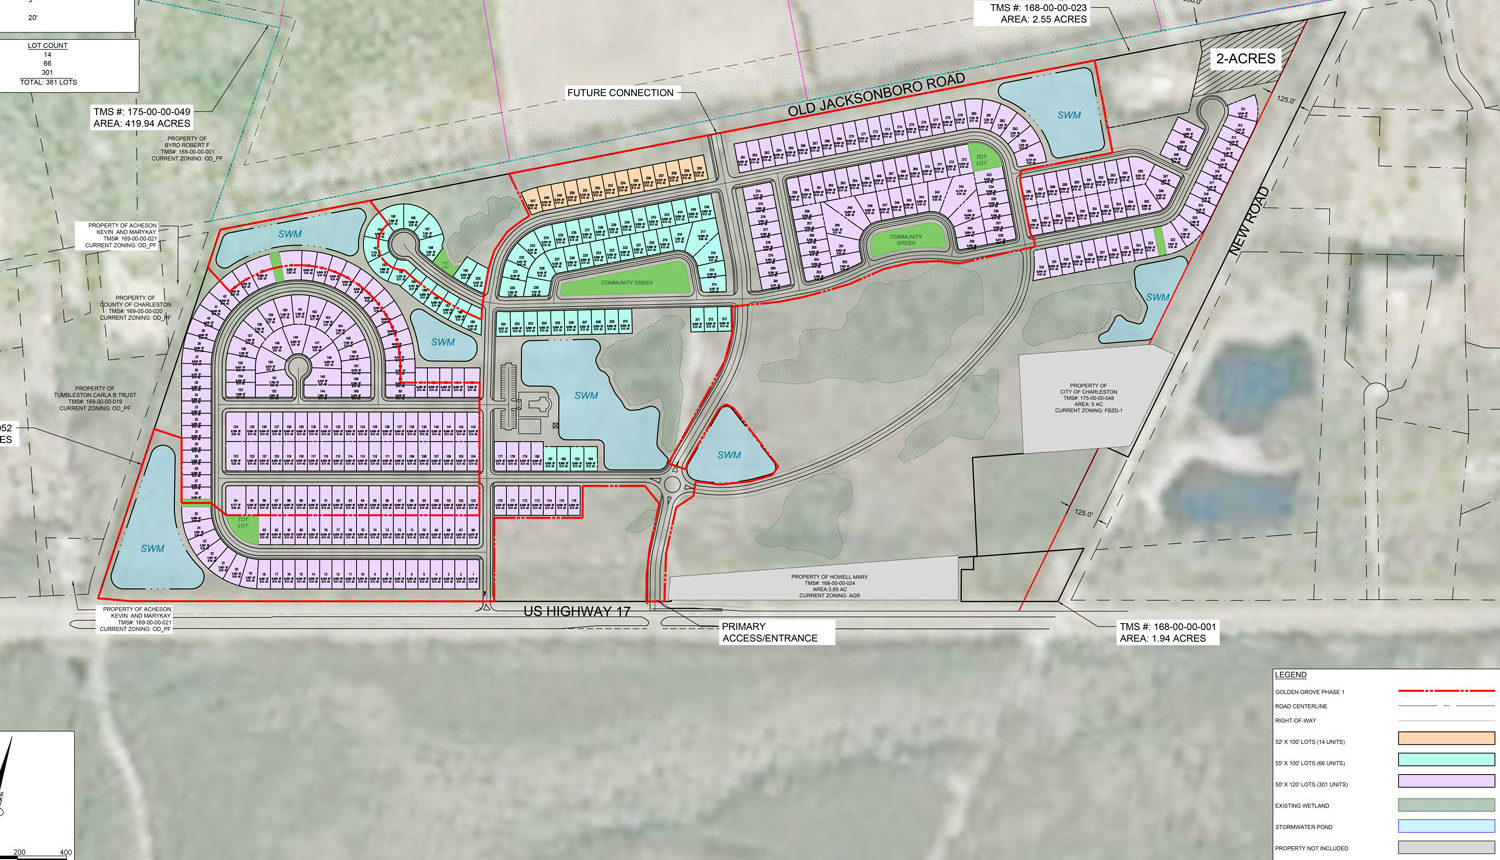 Golden Grove housing community aerial siteplan